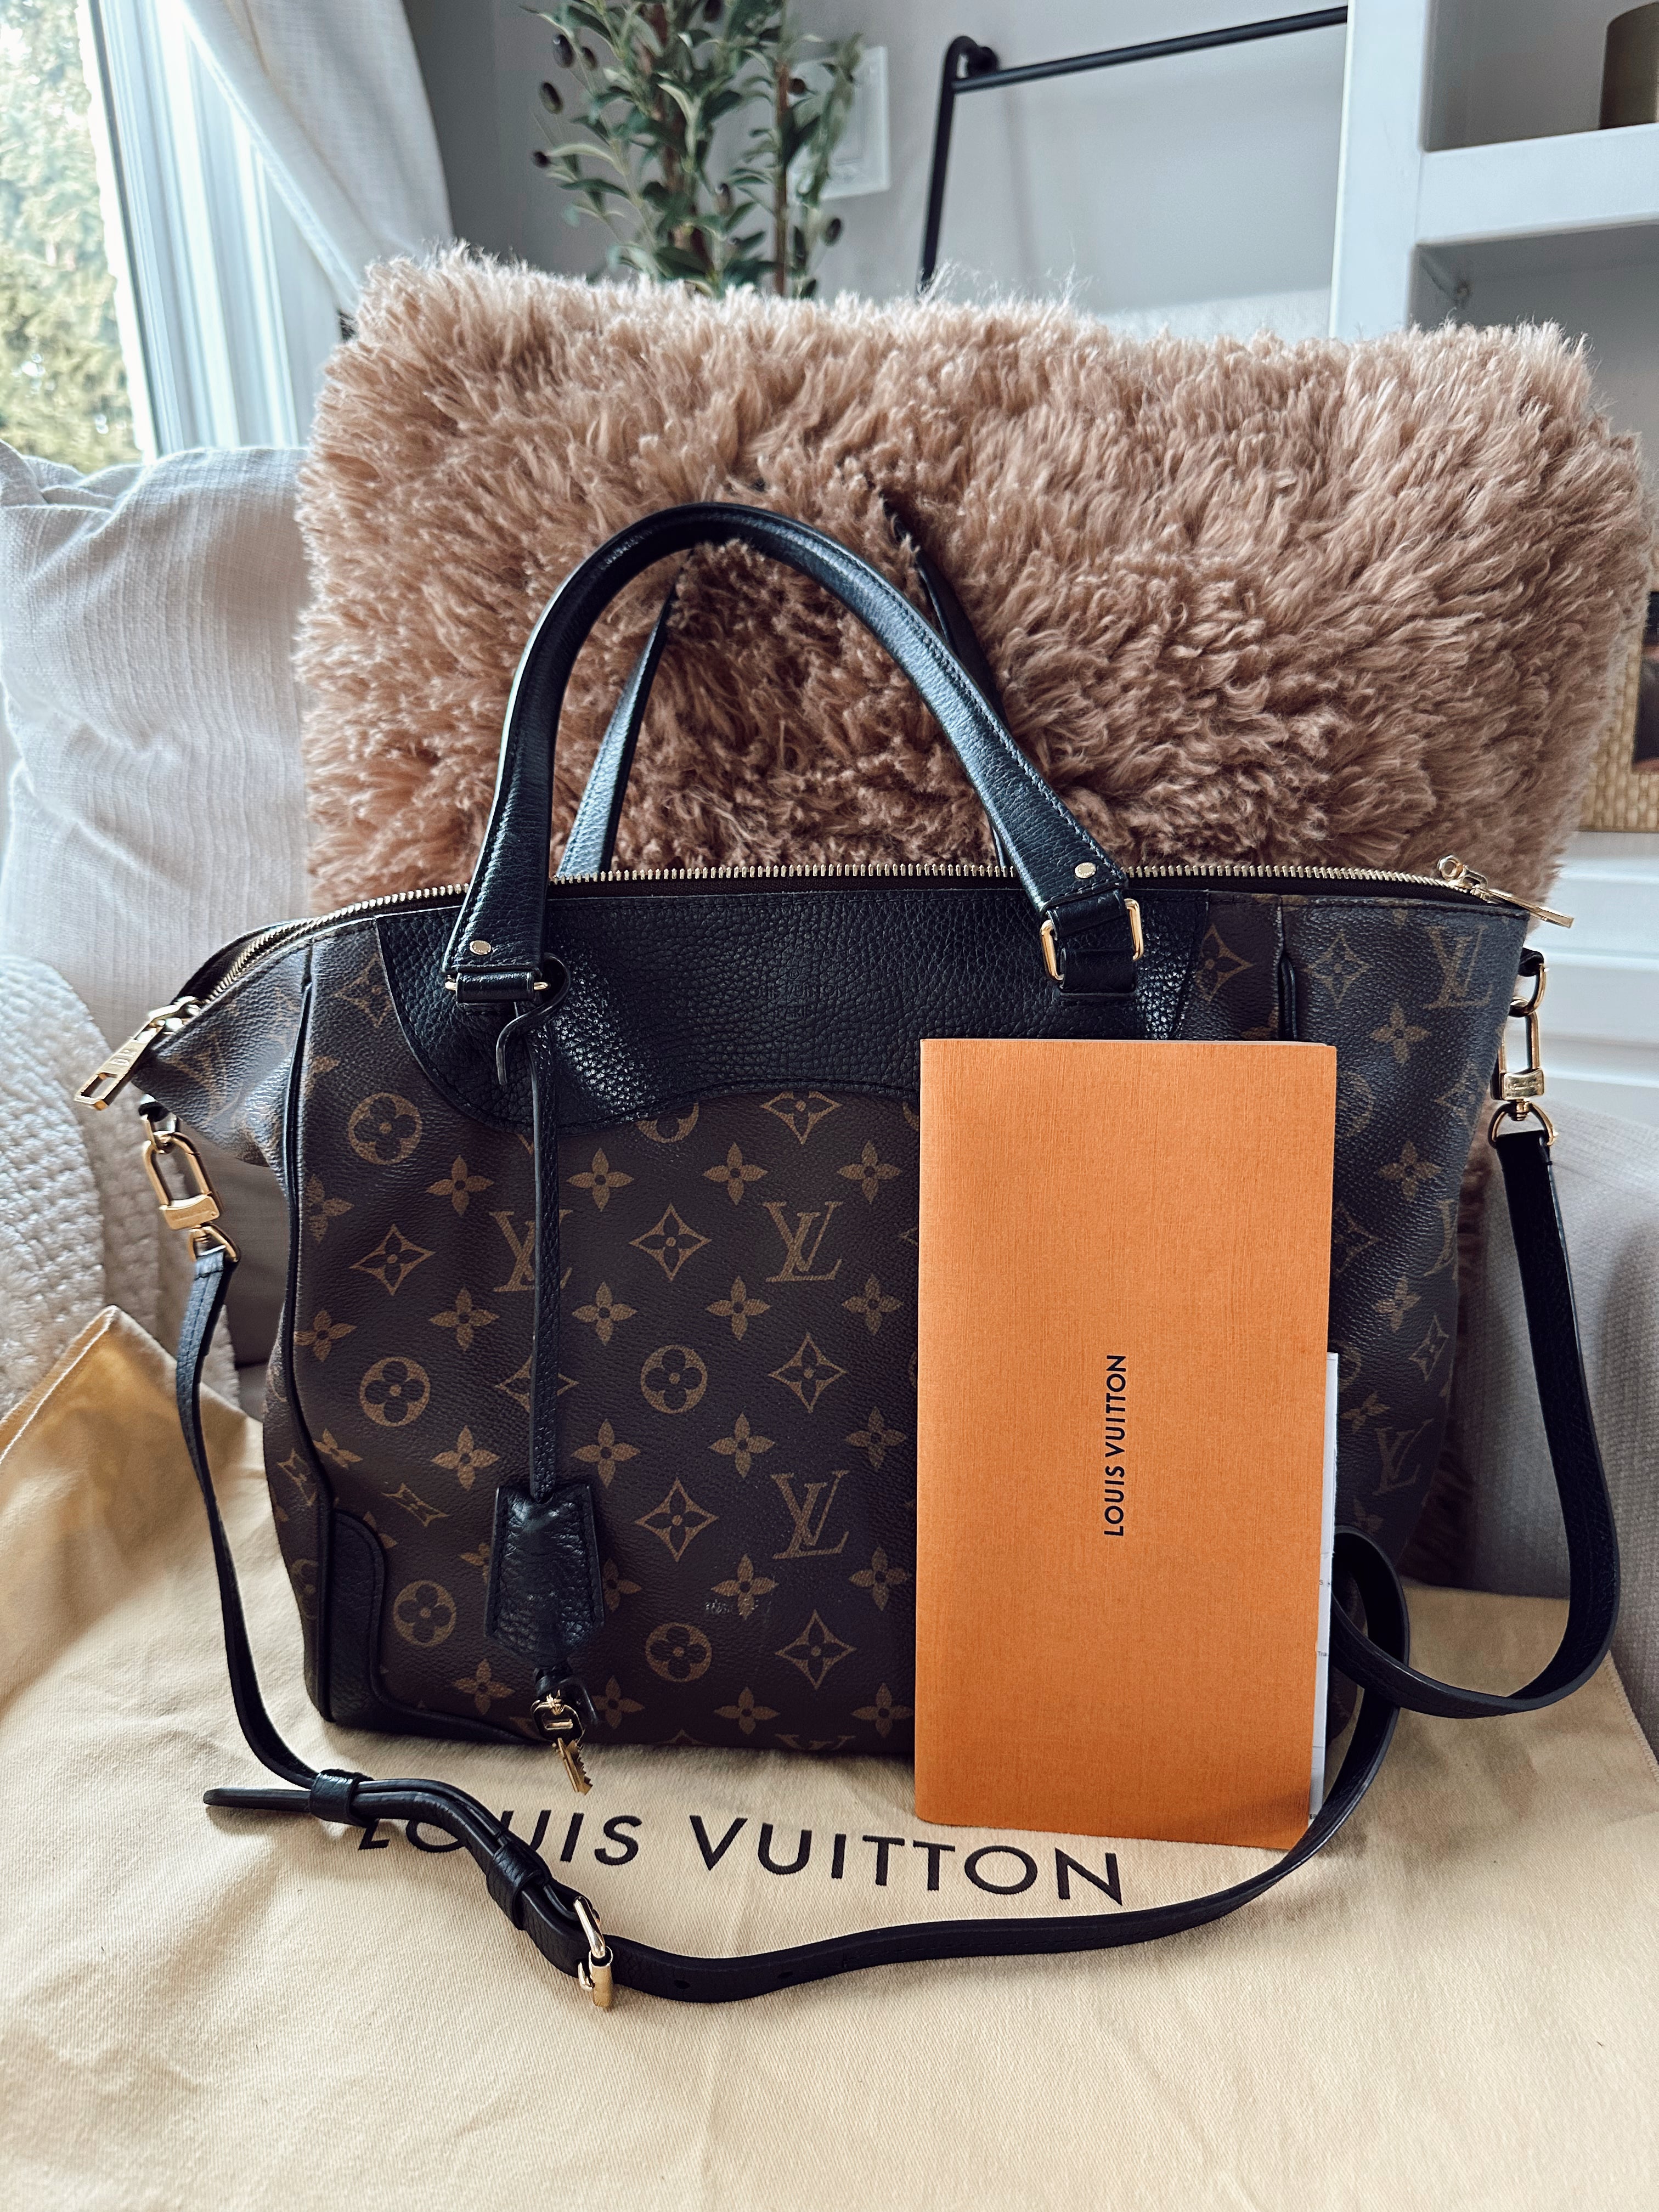 Louis Vuitton Estrela Handbag In Noir Tote